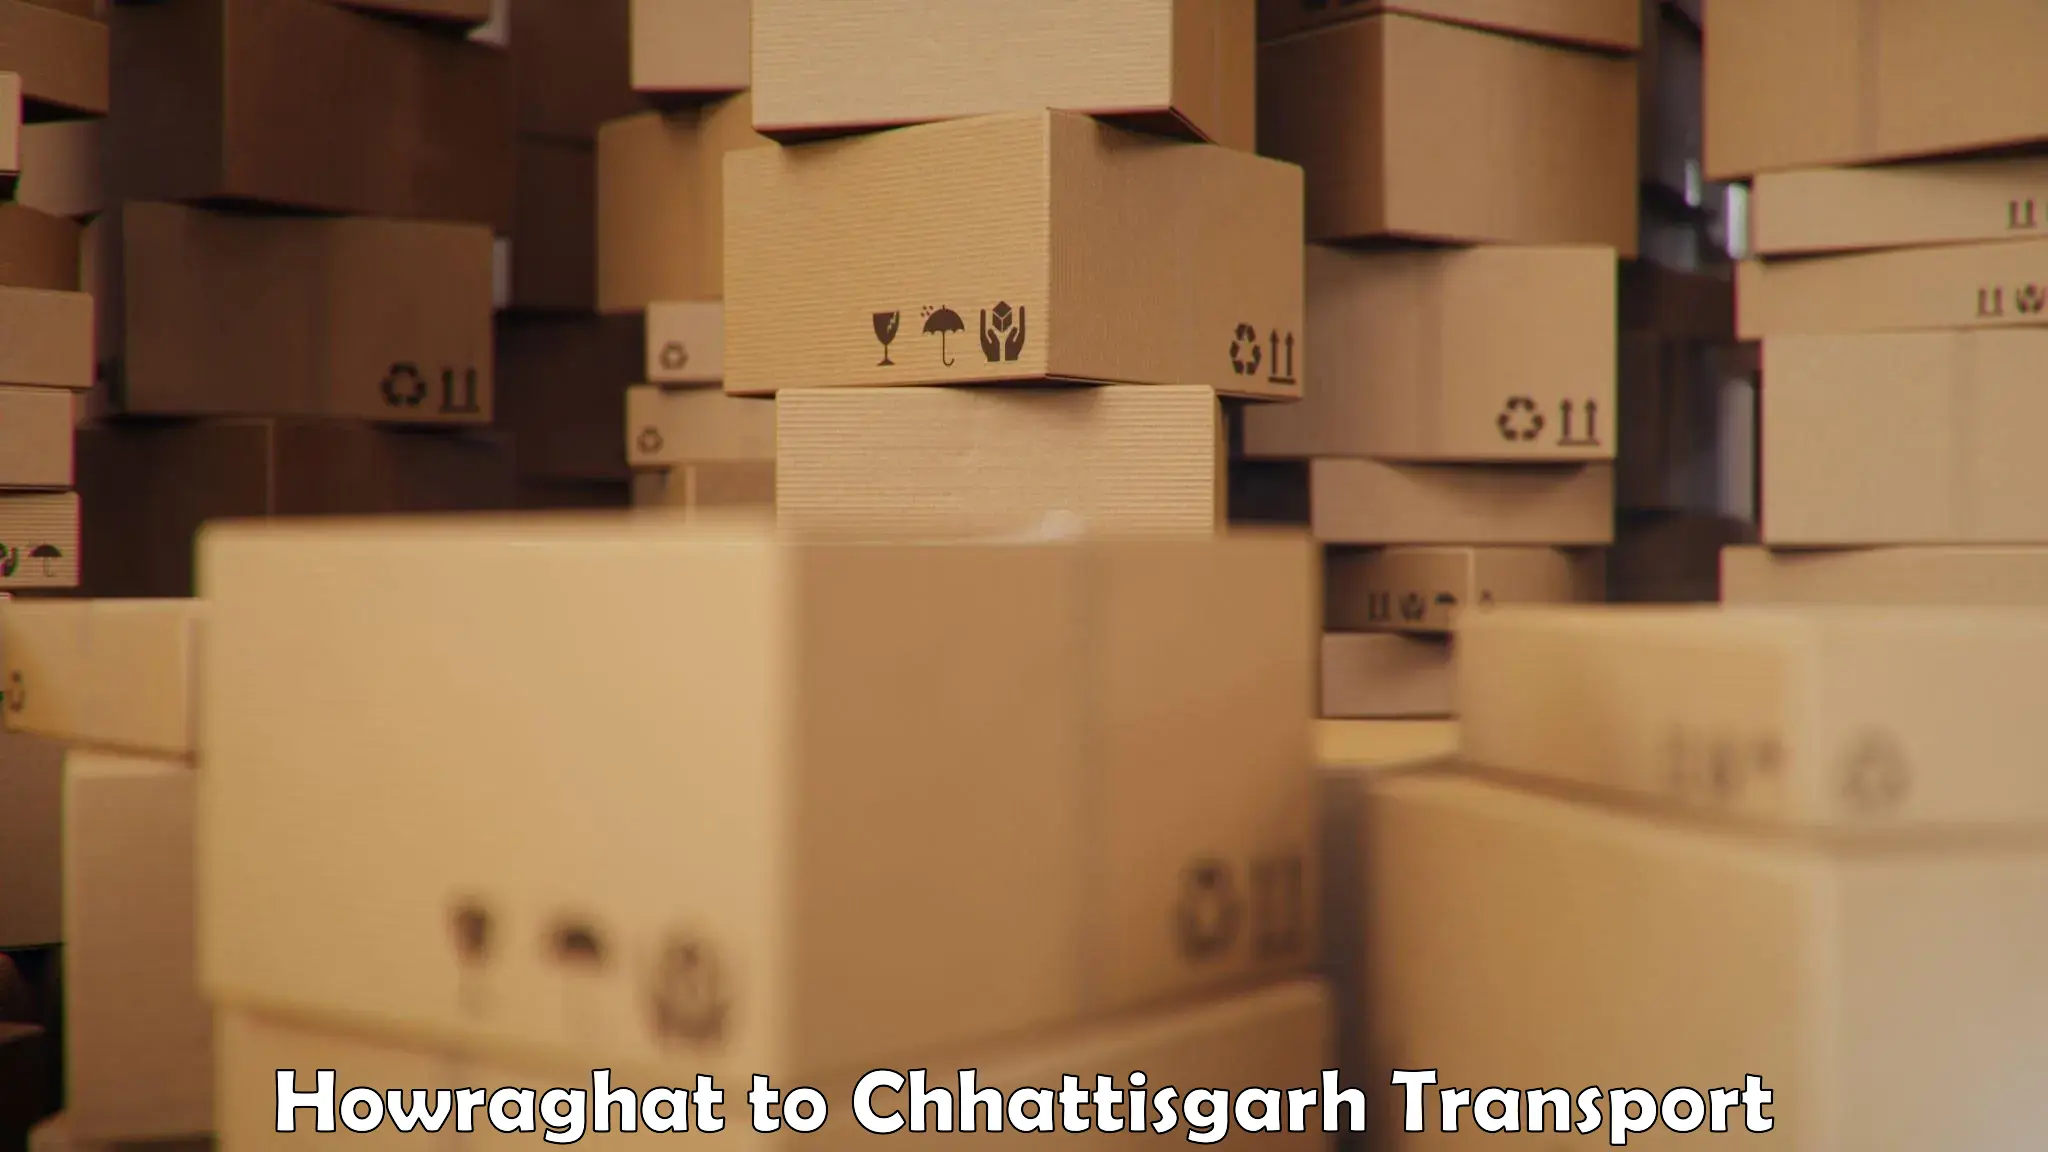 Truck transport companies in India Howraghat to Premnagar